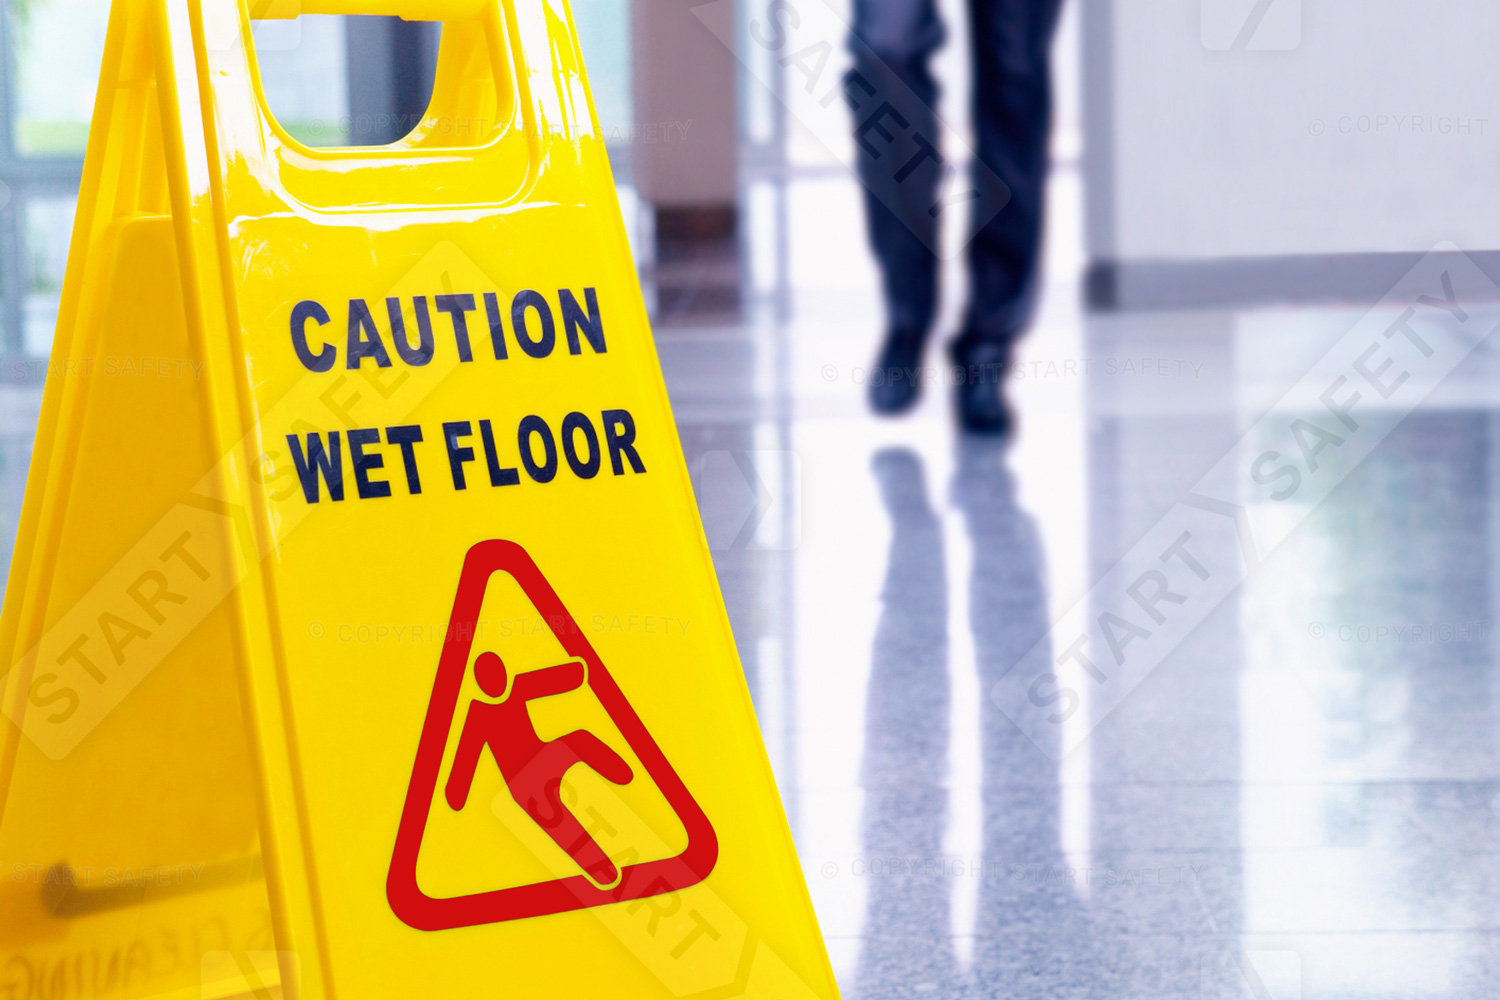 Professional Caution Wet Floor Sign A-Frame No Parking Warning Hazard Safety UK 